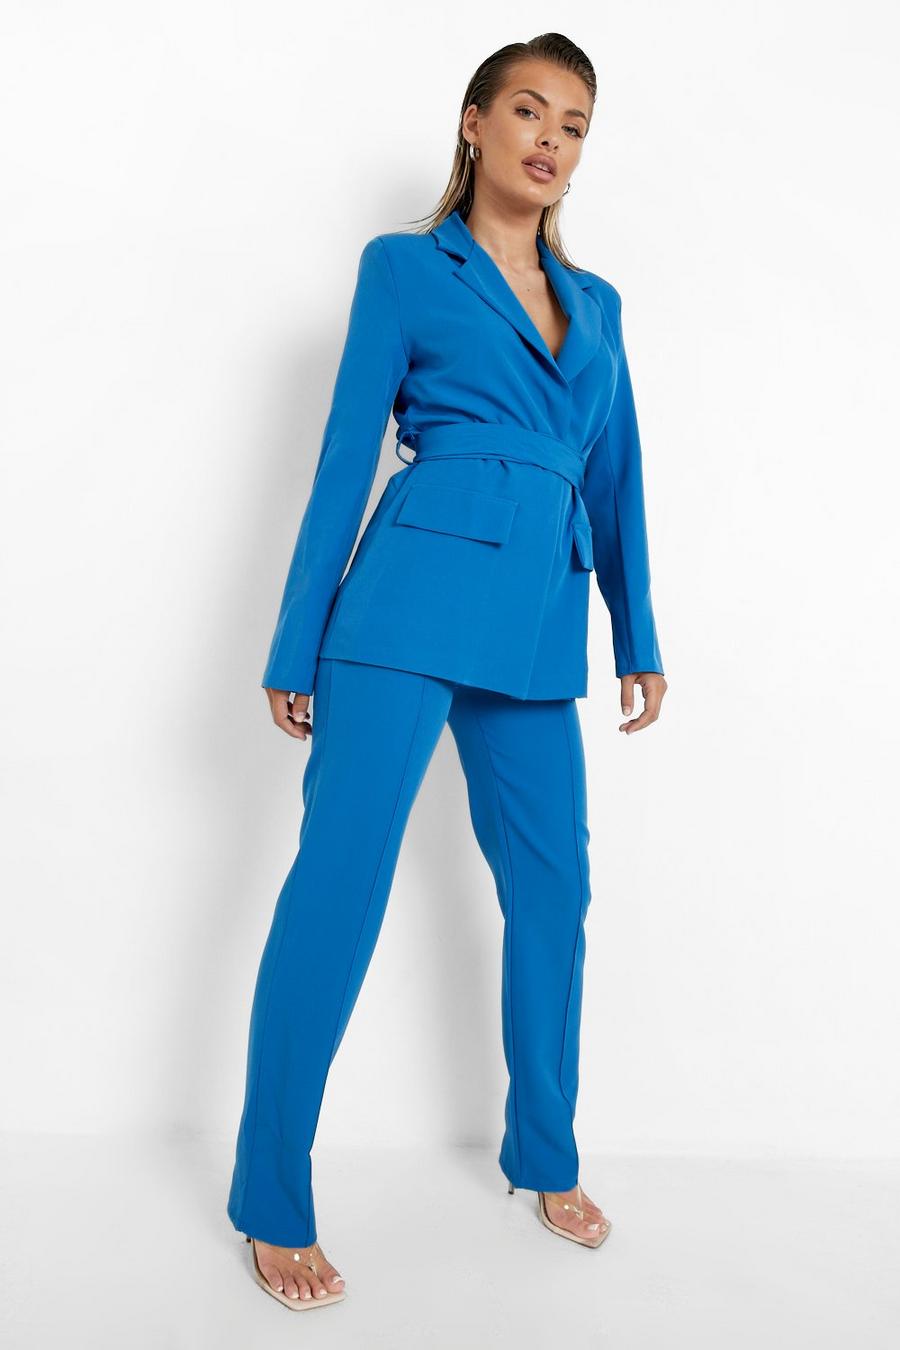 Azure blue Kostymbyxor med raka ben